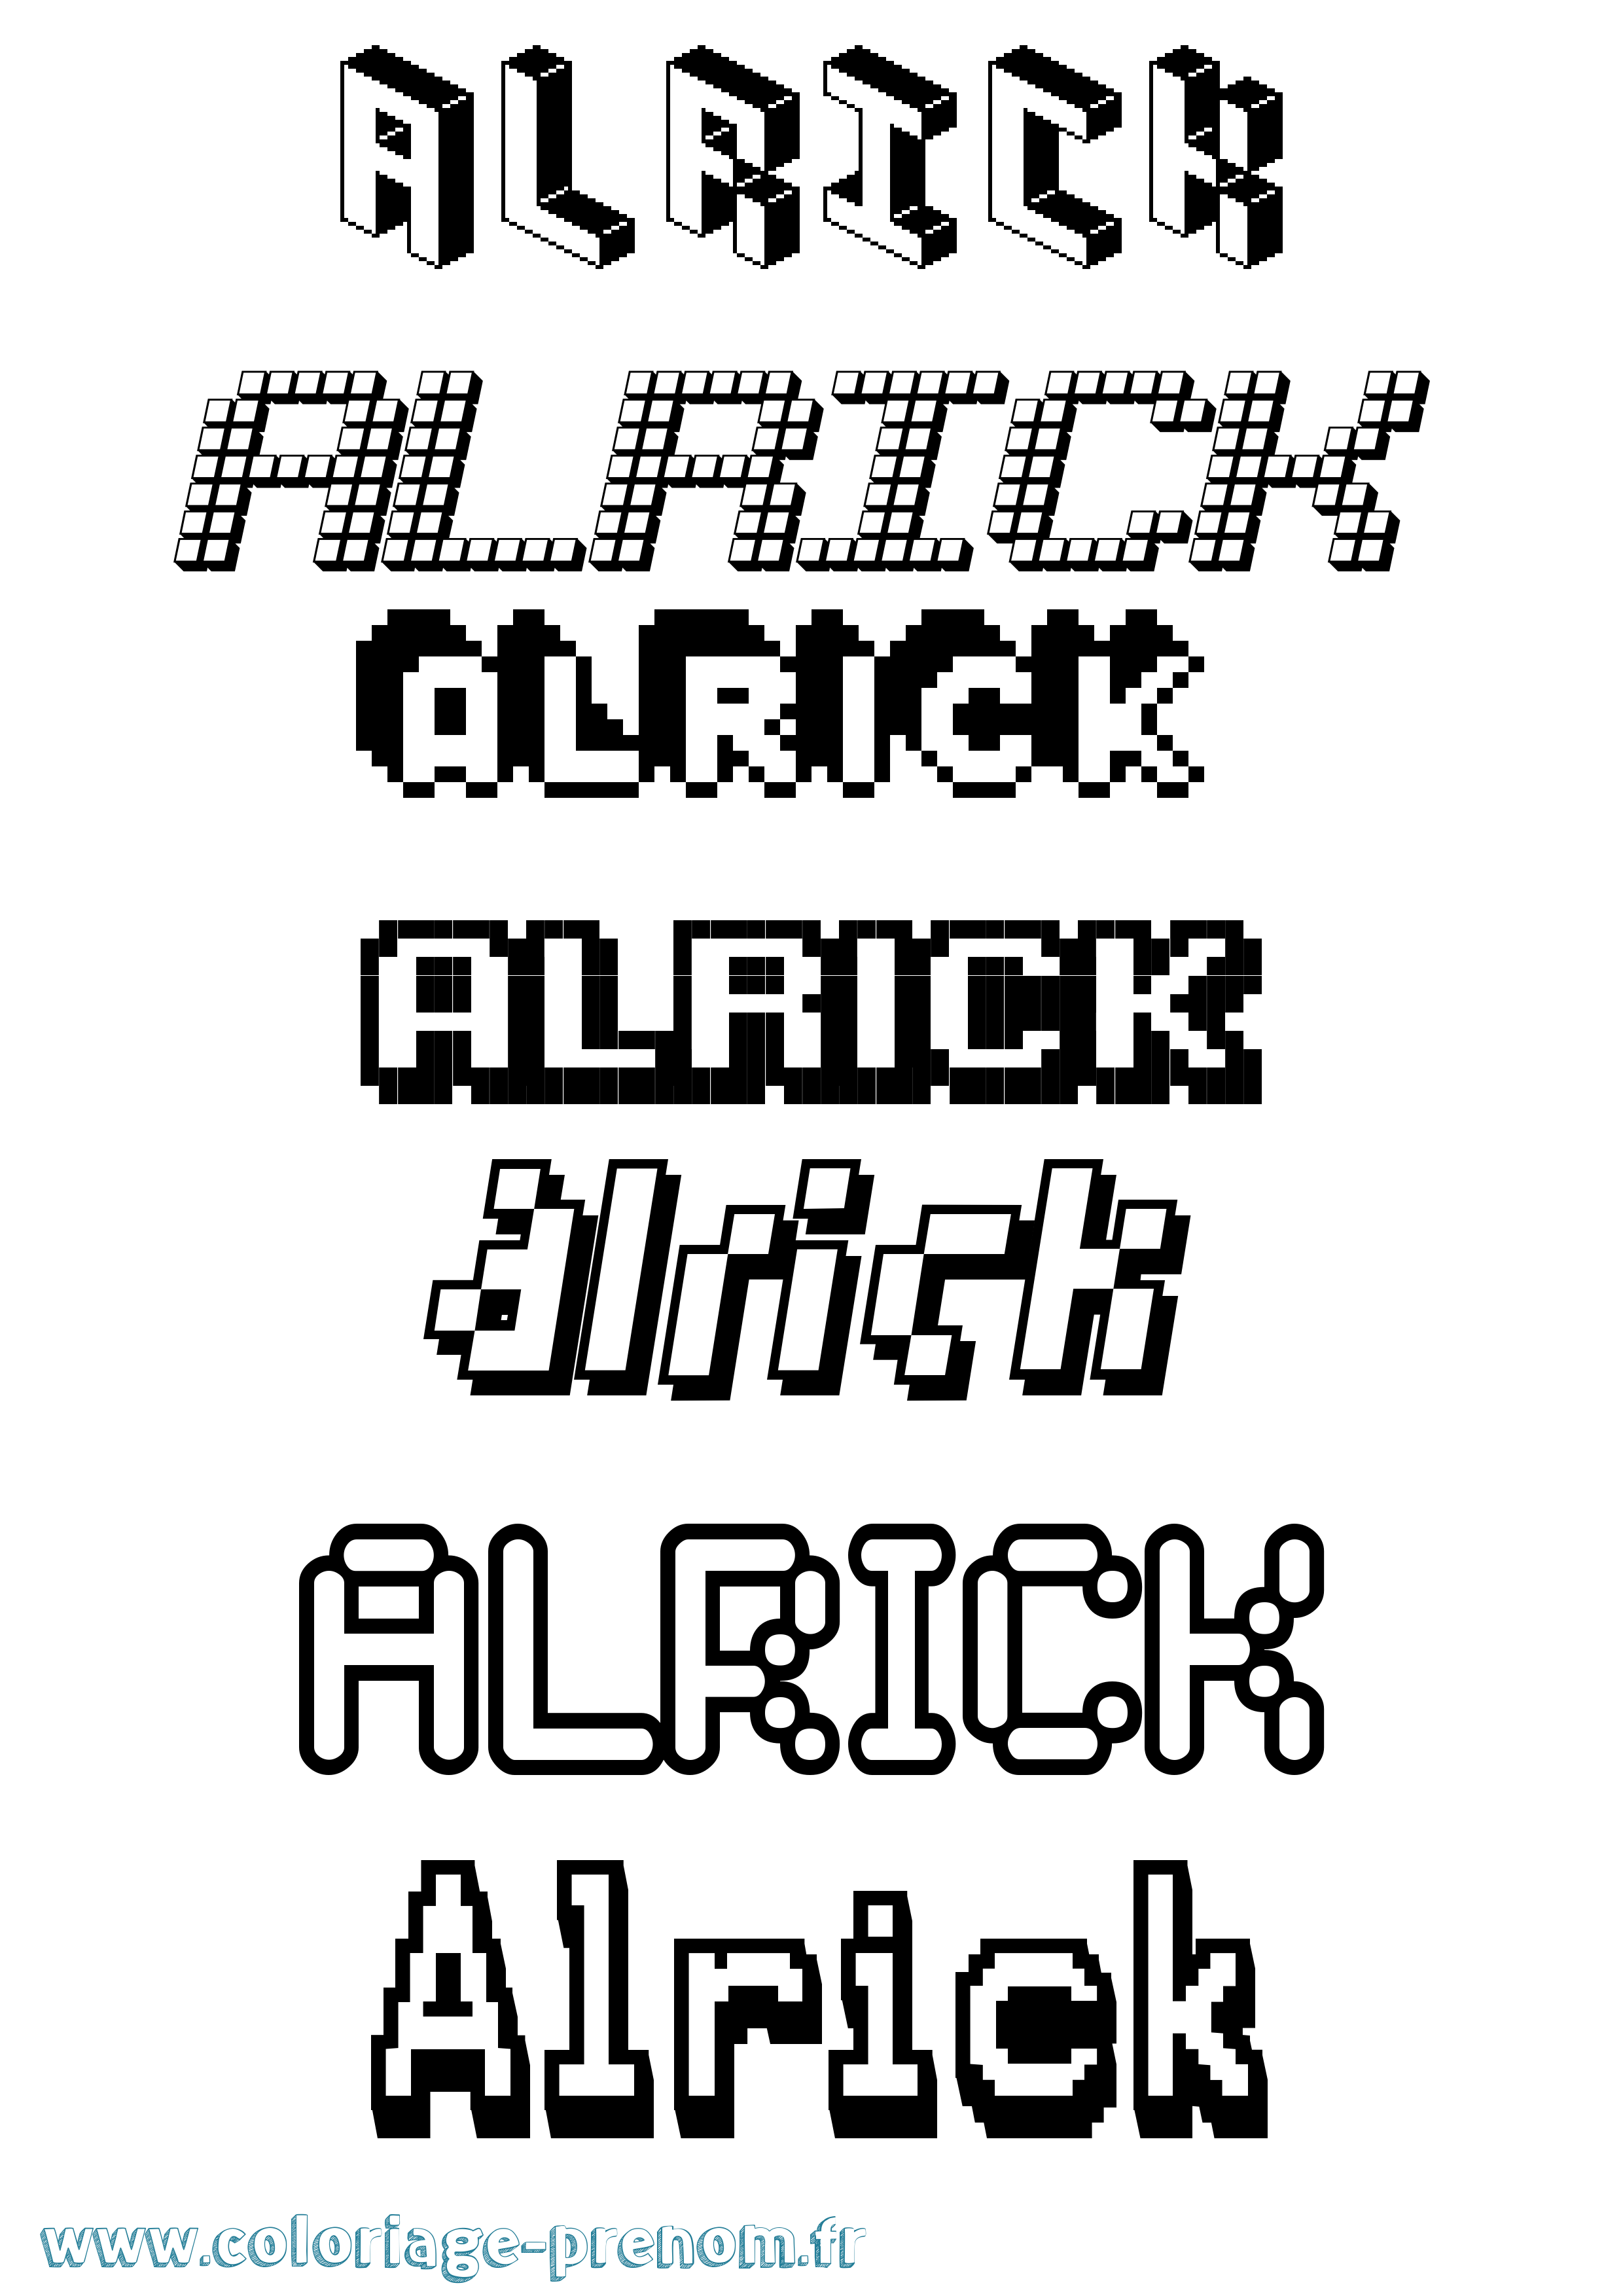 Coloriage prénom Alrick Pixel